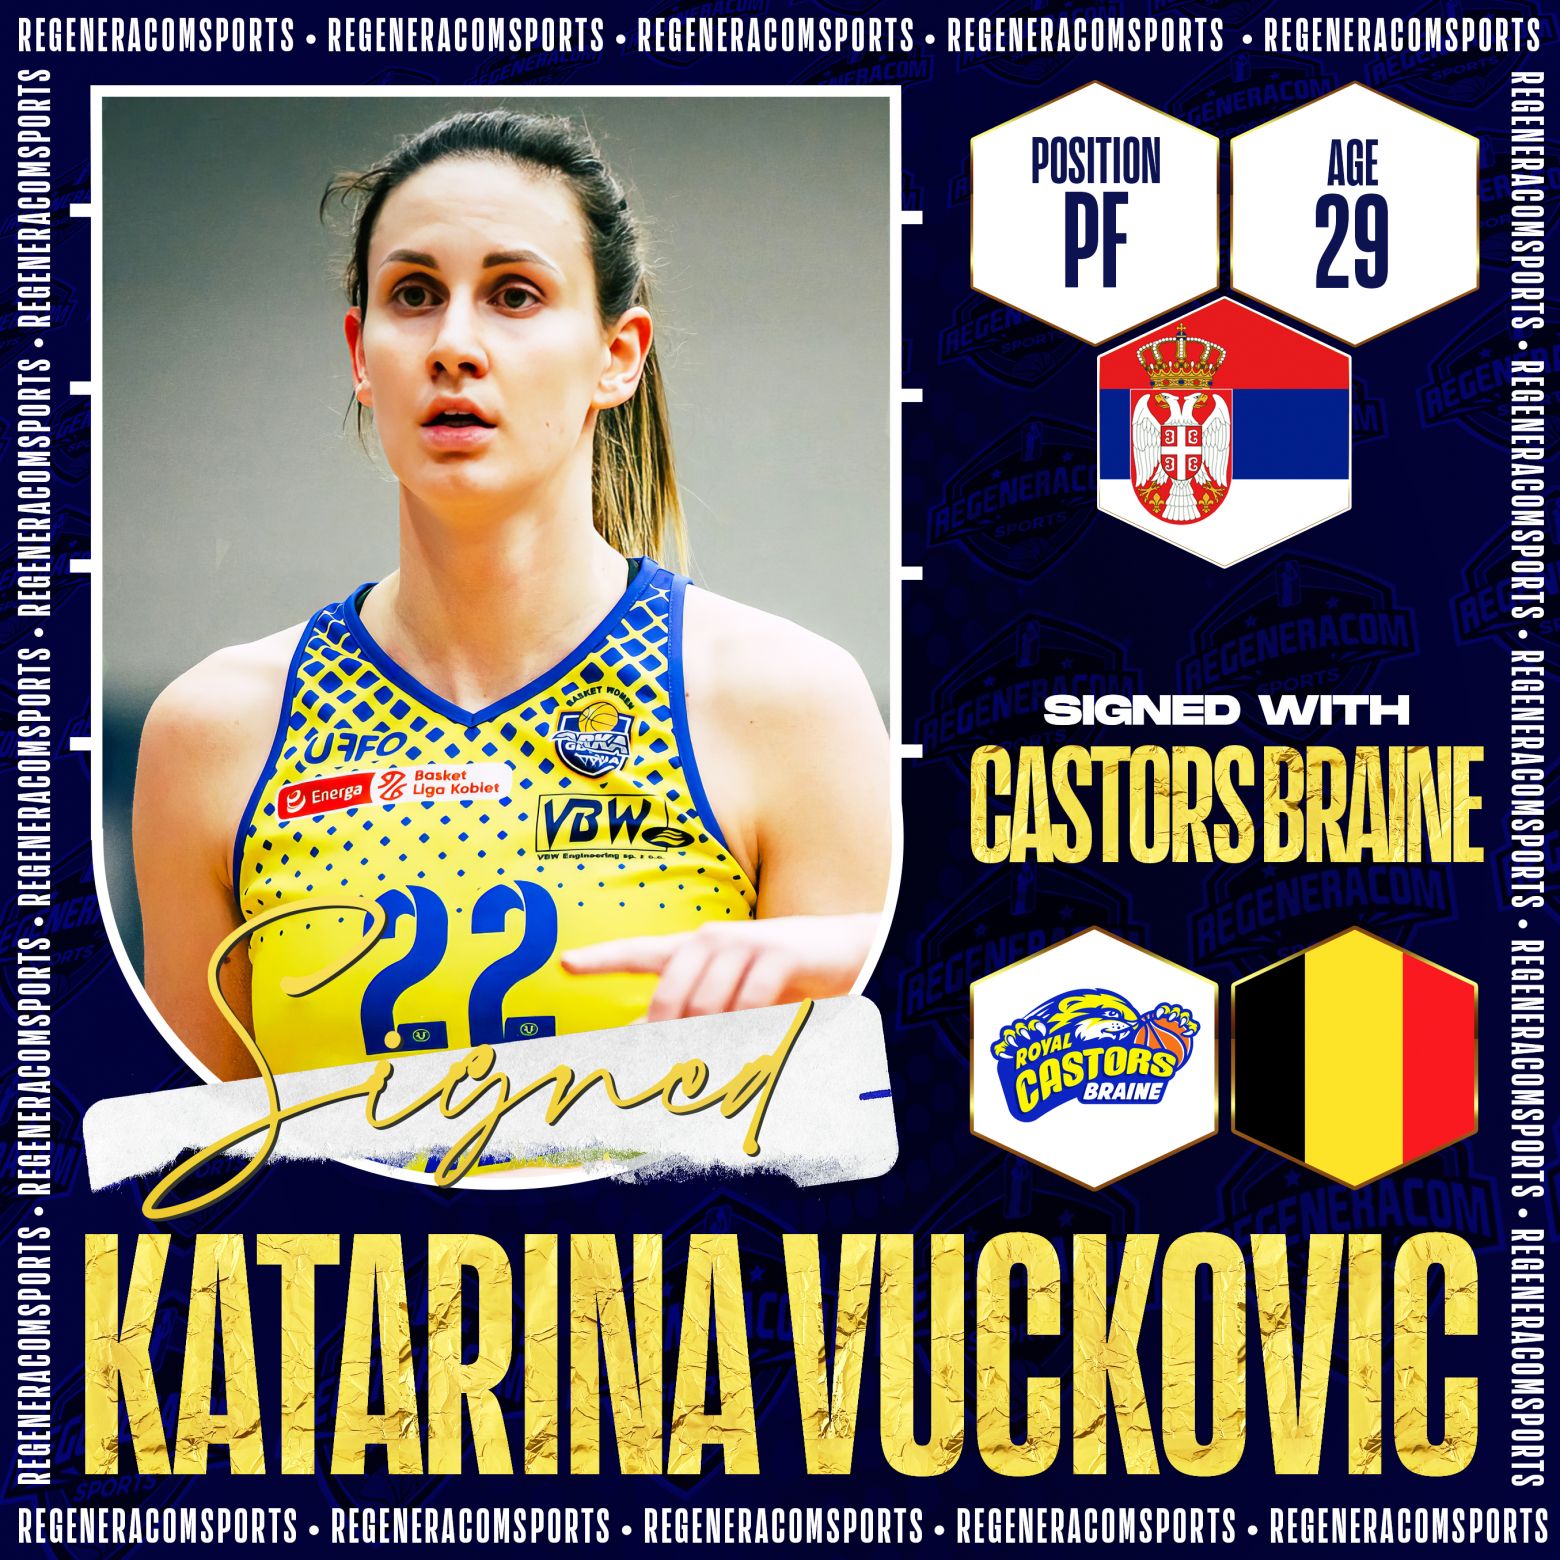 KATARINA VUCKOVIC ha firmado con Castors Braine para la temporada 2023/24